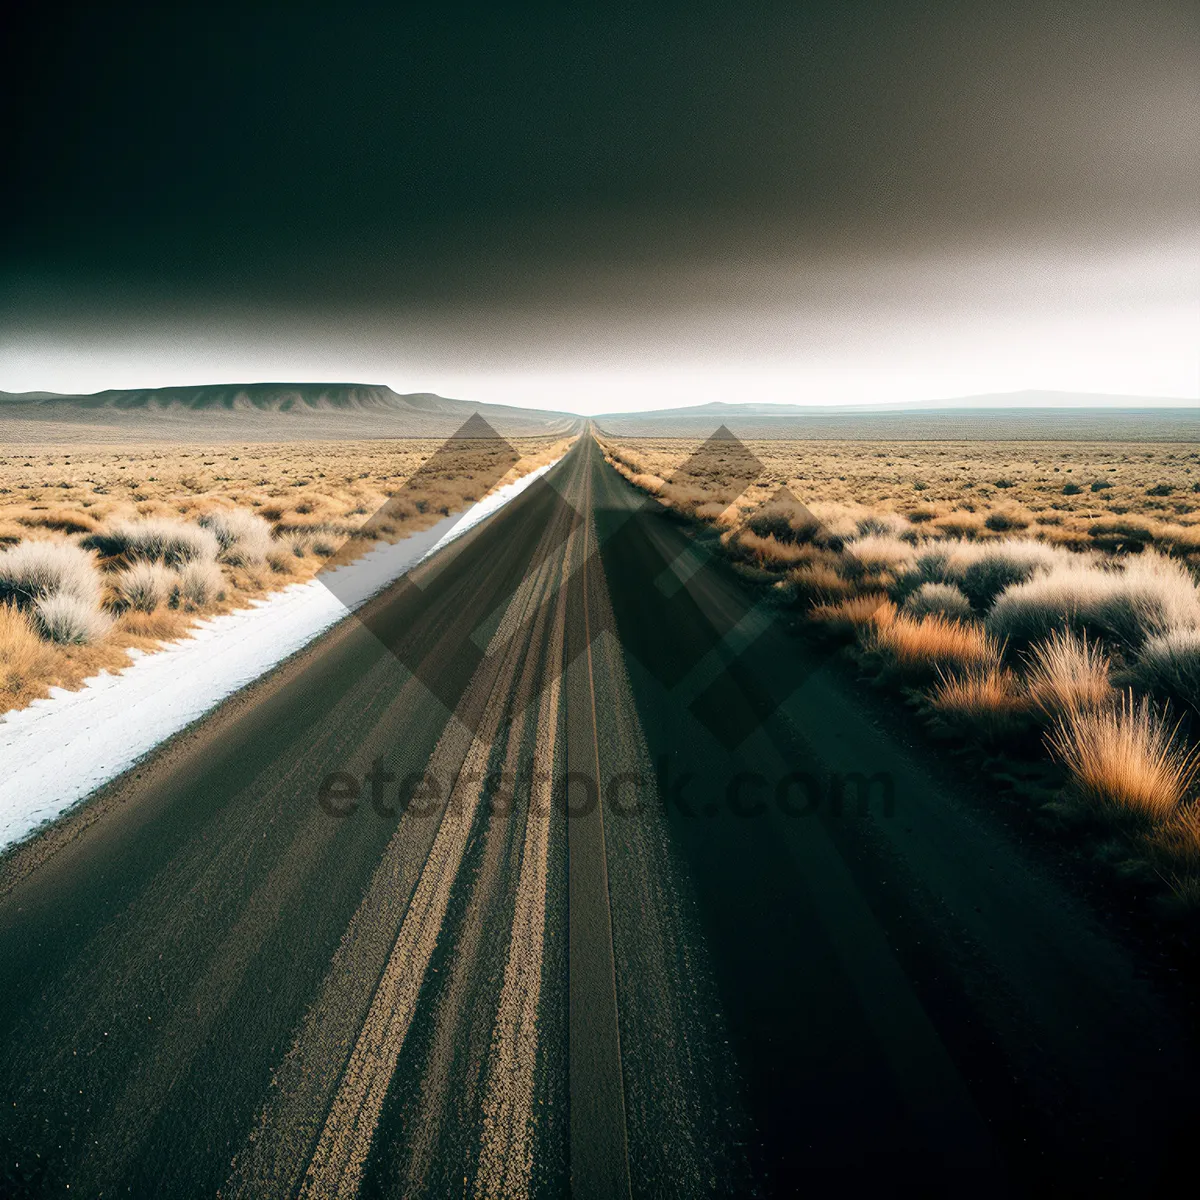 Picture of Scenic Highway through Rural Desert Landscape